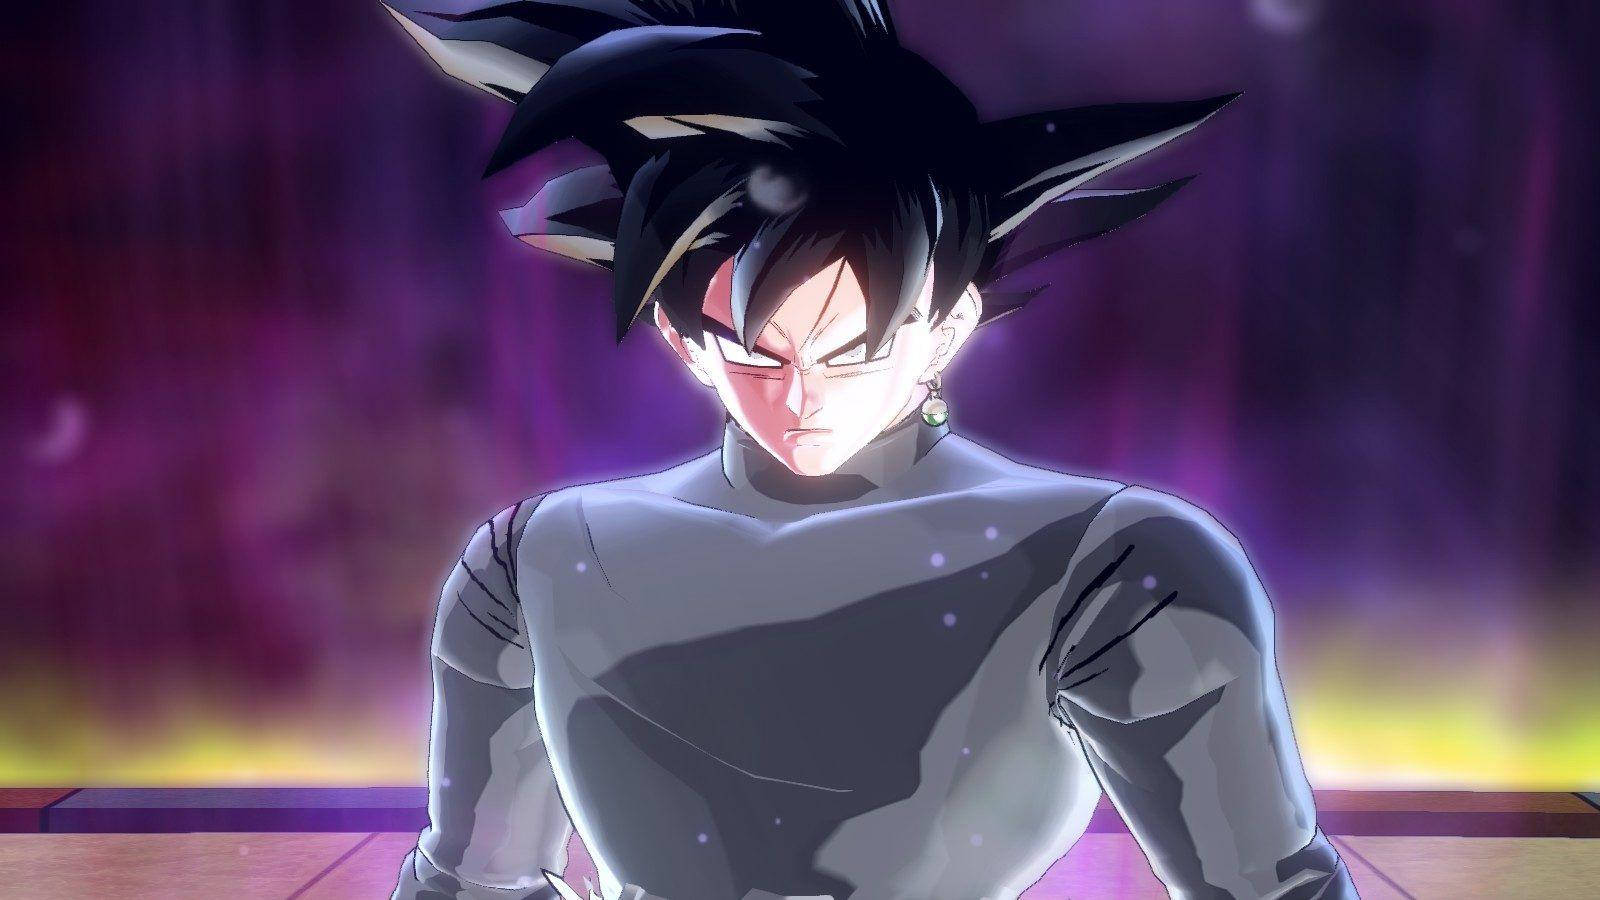 Earring Ultra Instinct Goku Background